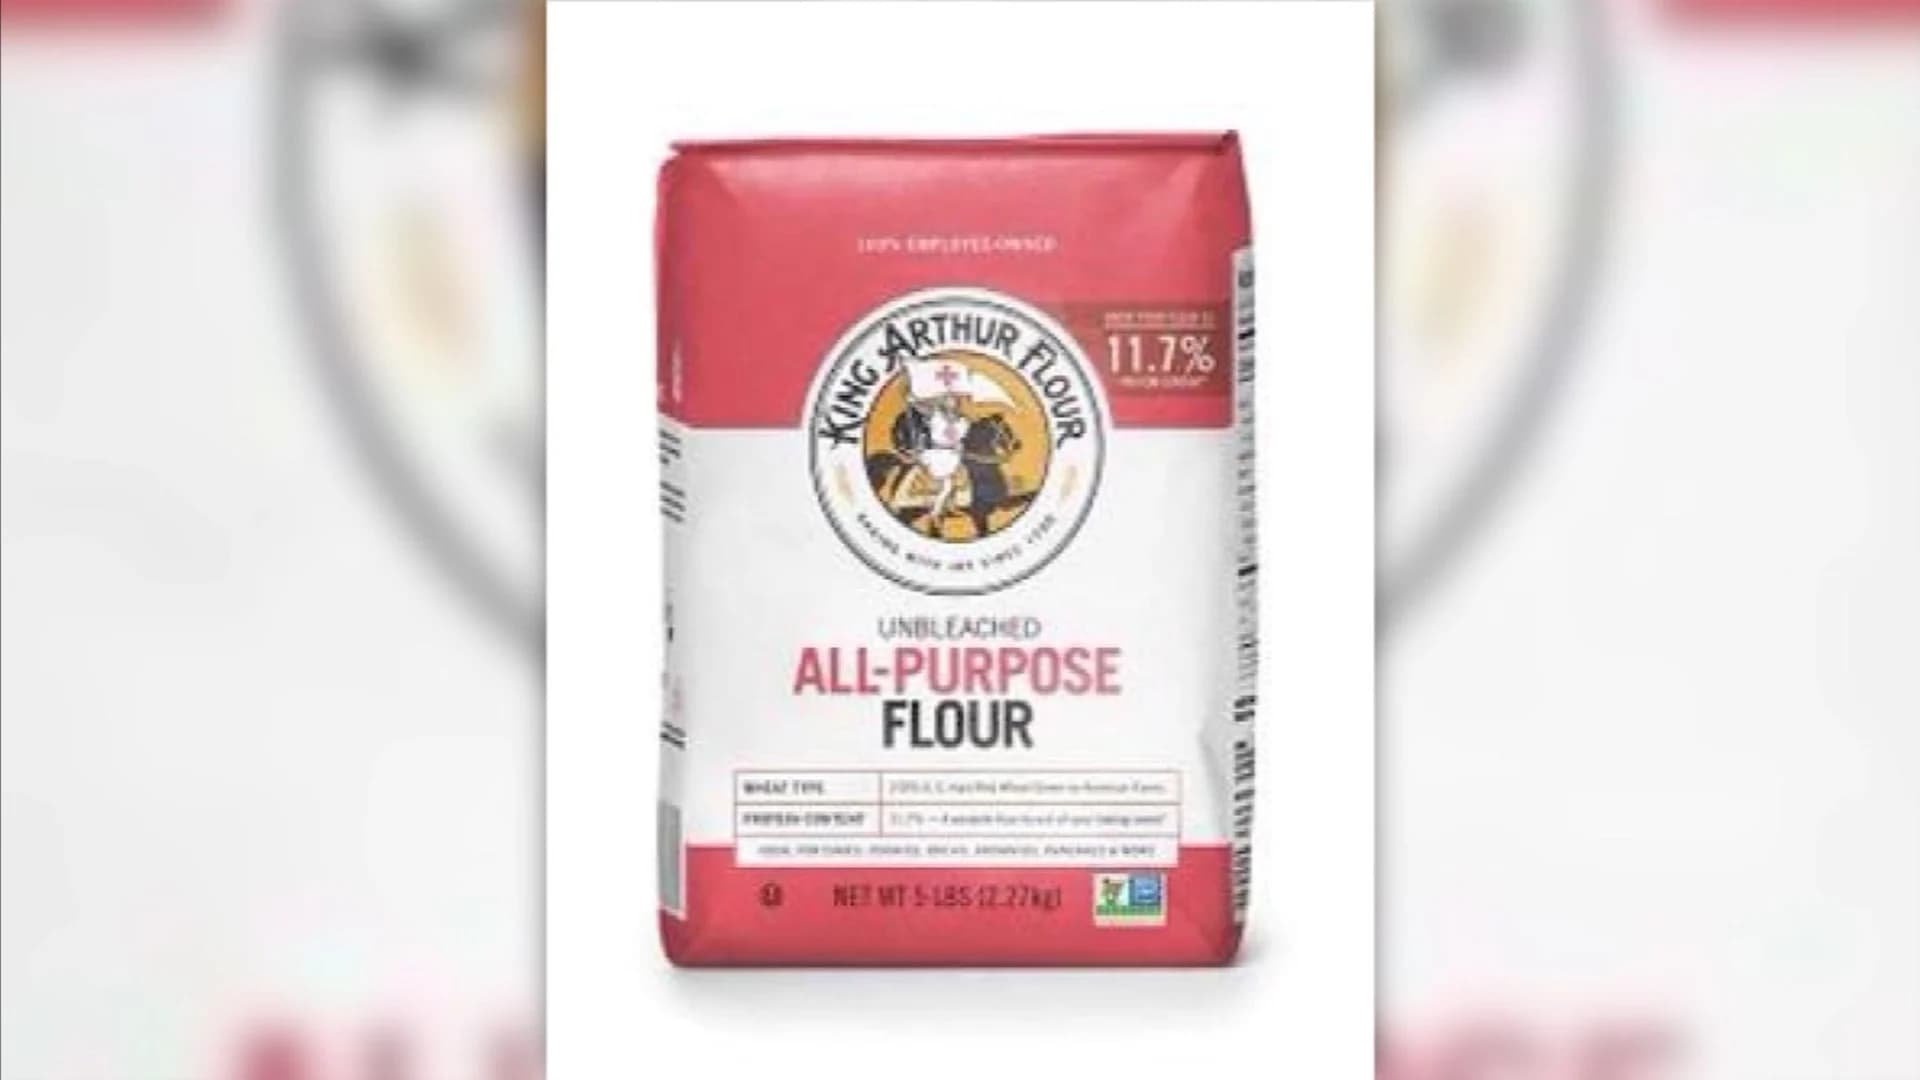 Company expands recall of all-purpose flour due to possible E. coli contamination